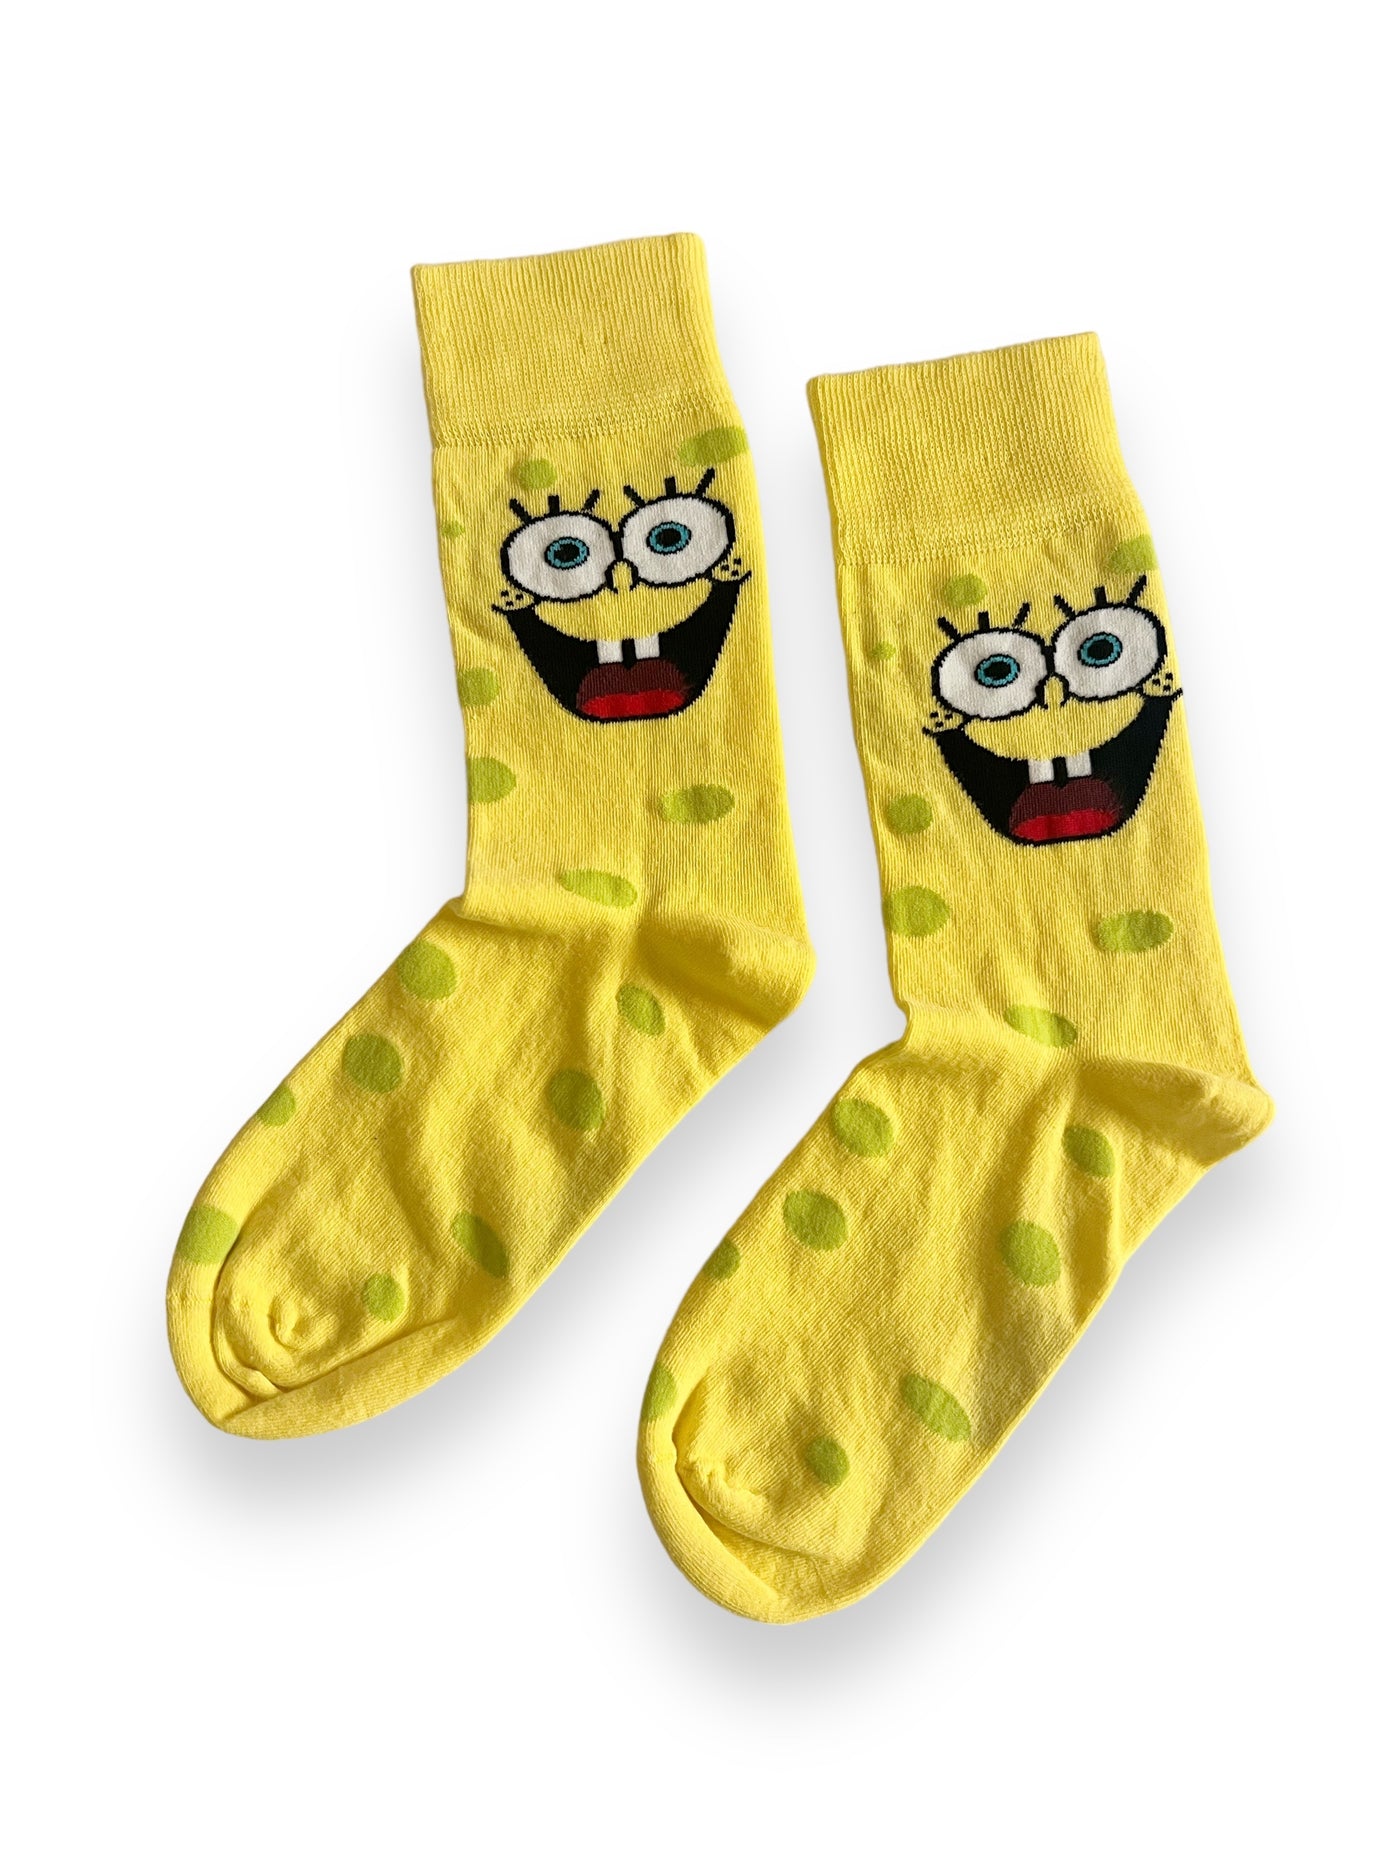 SpongeBob SquarePants socks 2 - PROBOXS